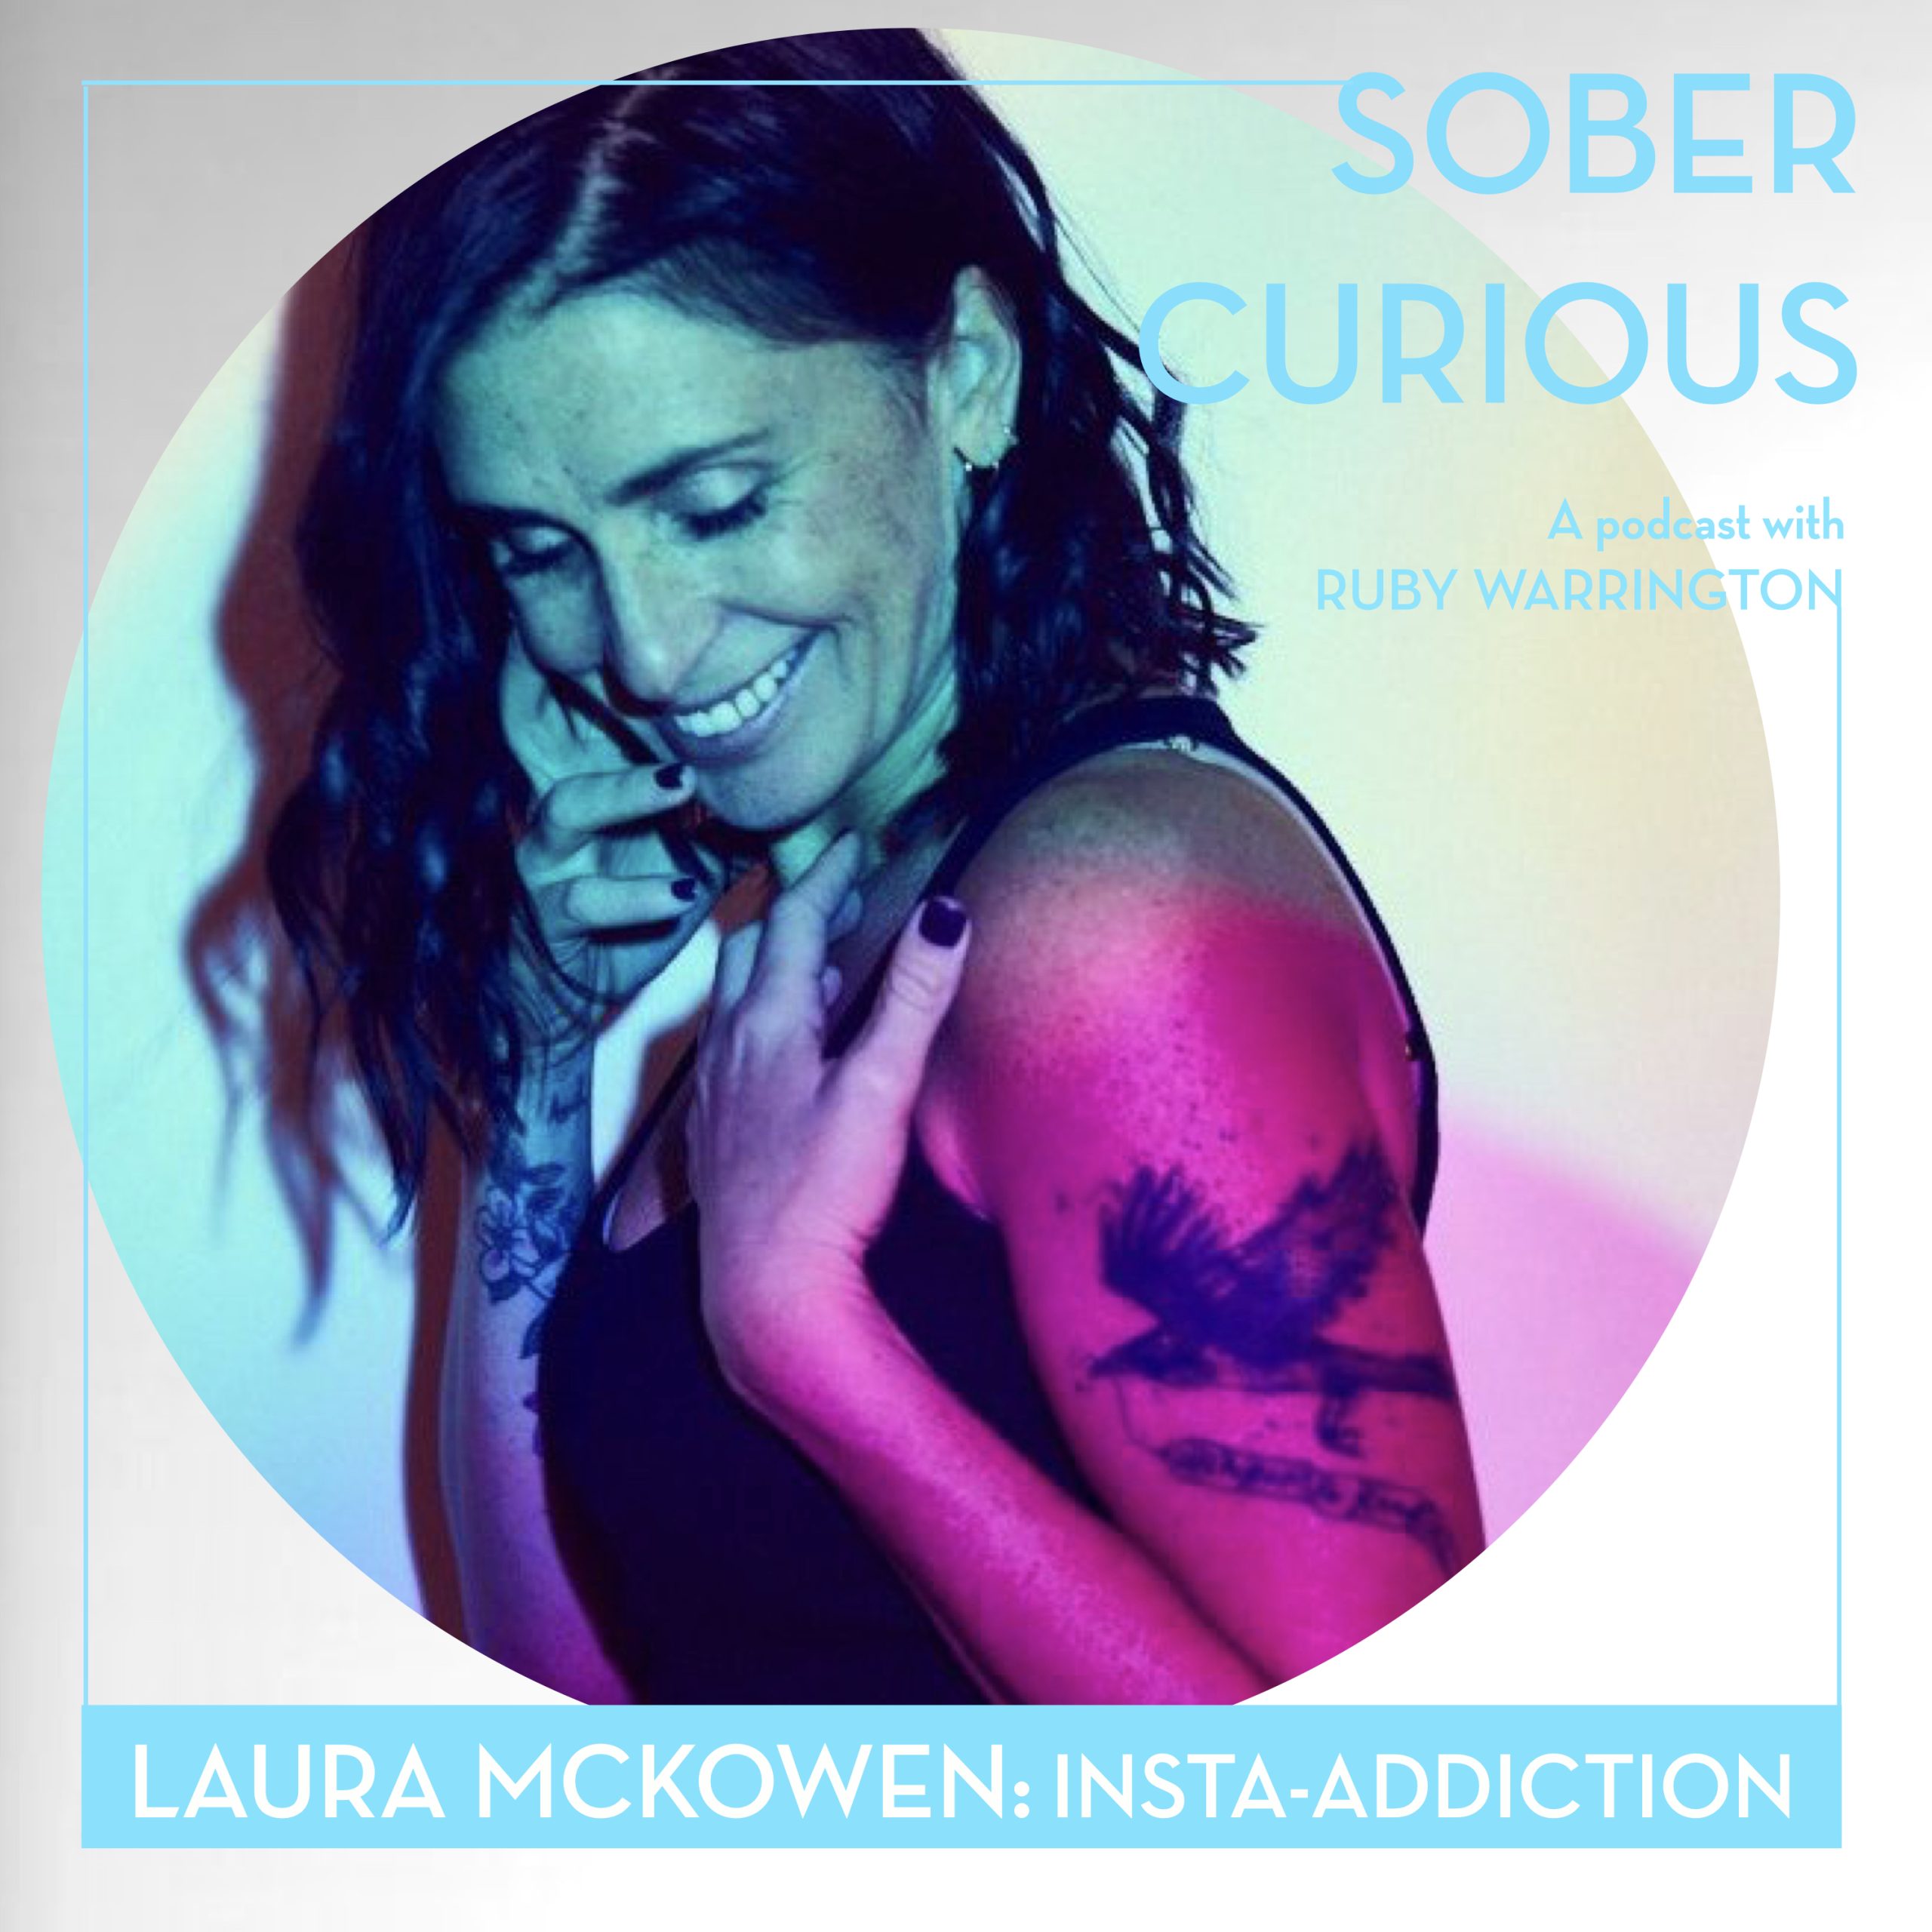 Laura McKowen sober curious podcast instagram addiction